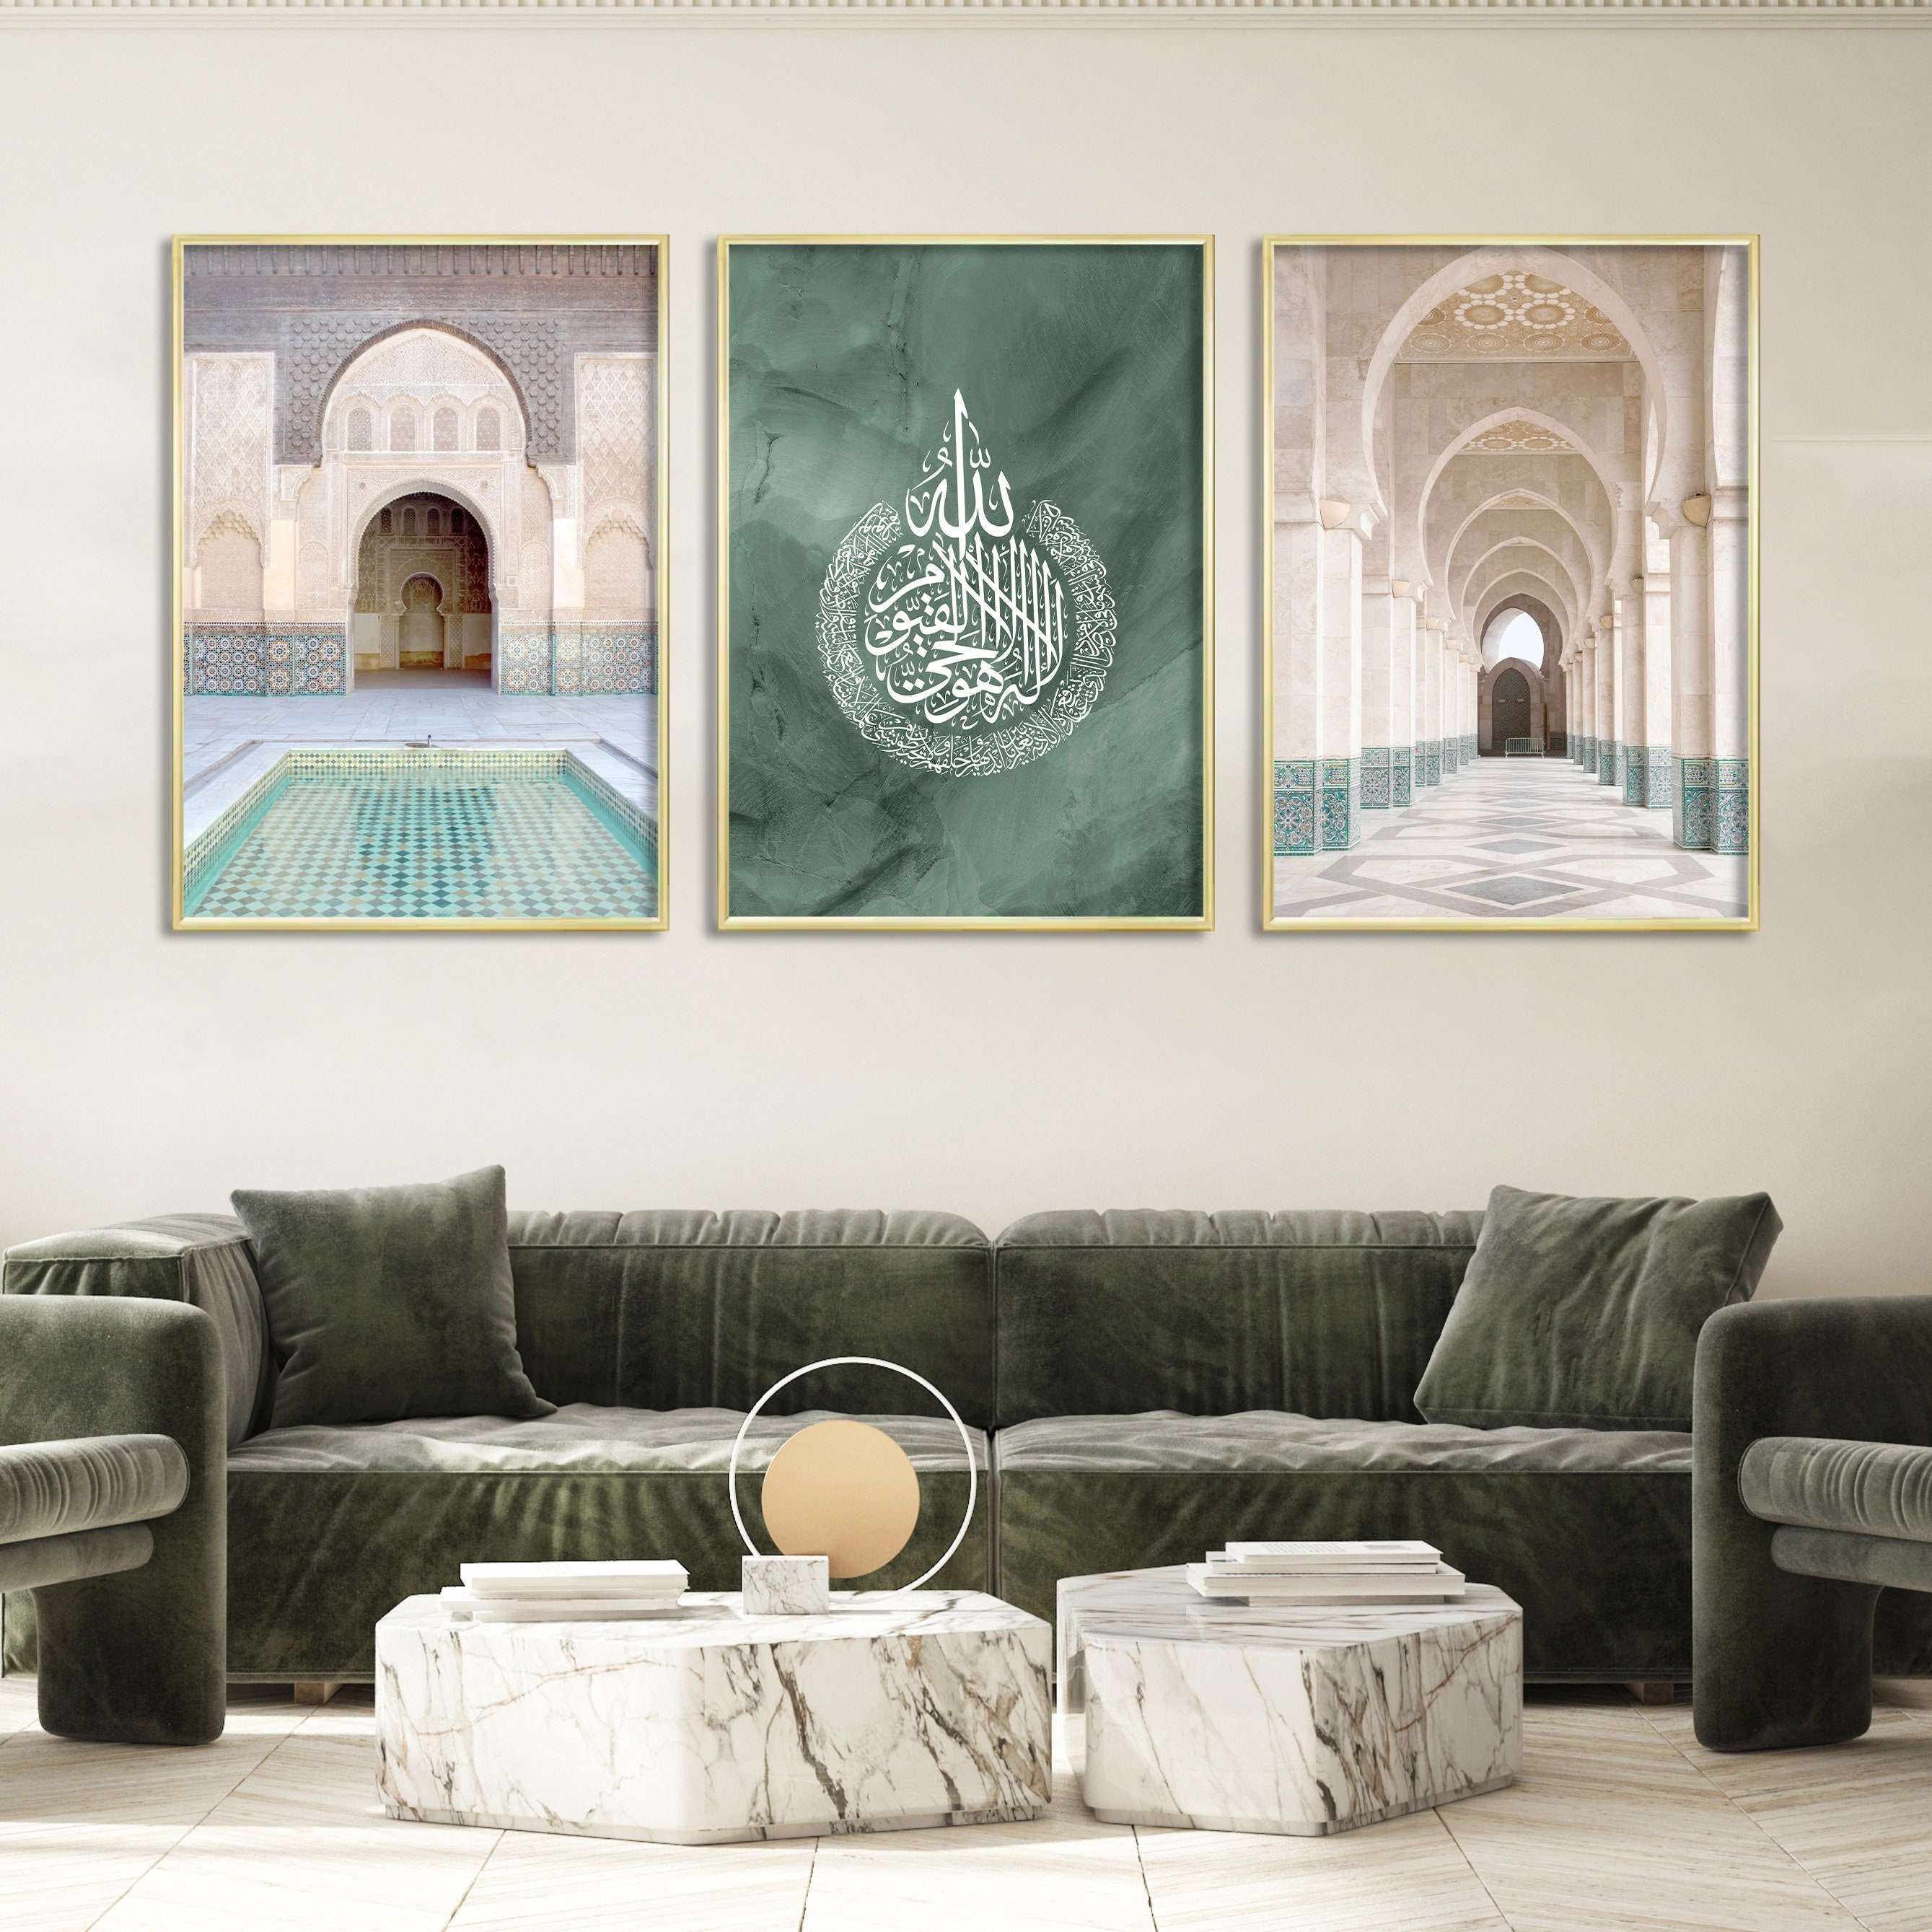 LIANGX Leinwand Poster Bilder Deko Wanddeko,Grüne Blätter Gold Allah  Islamische Wandbilder Set Wohnzimmer Schlafzimmer Home Dekoration leinwand